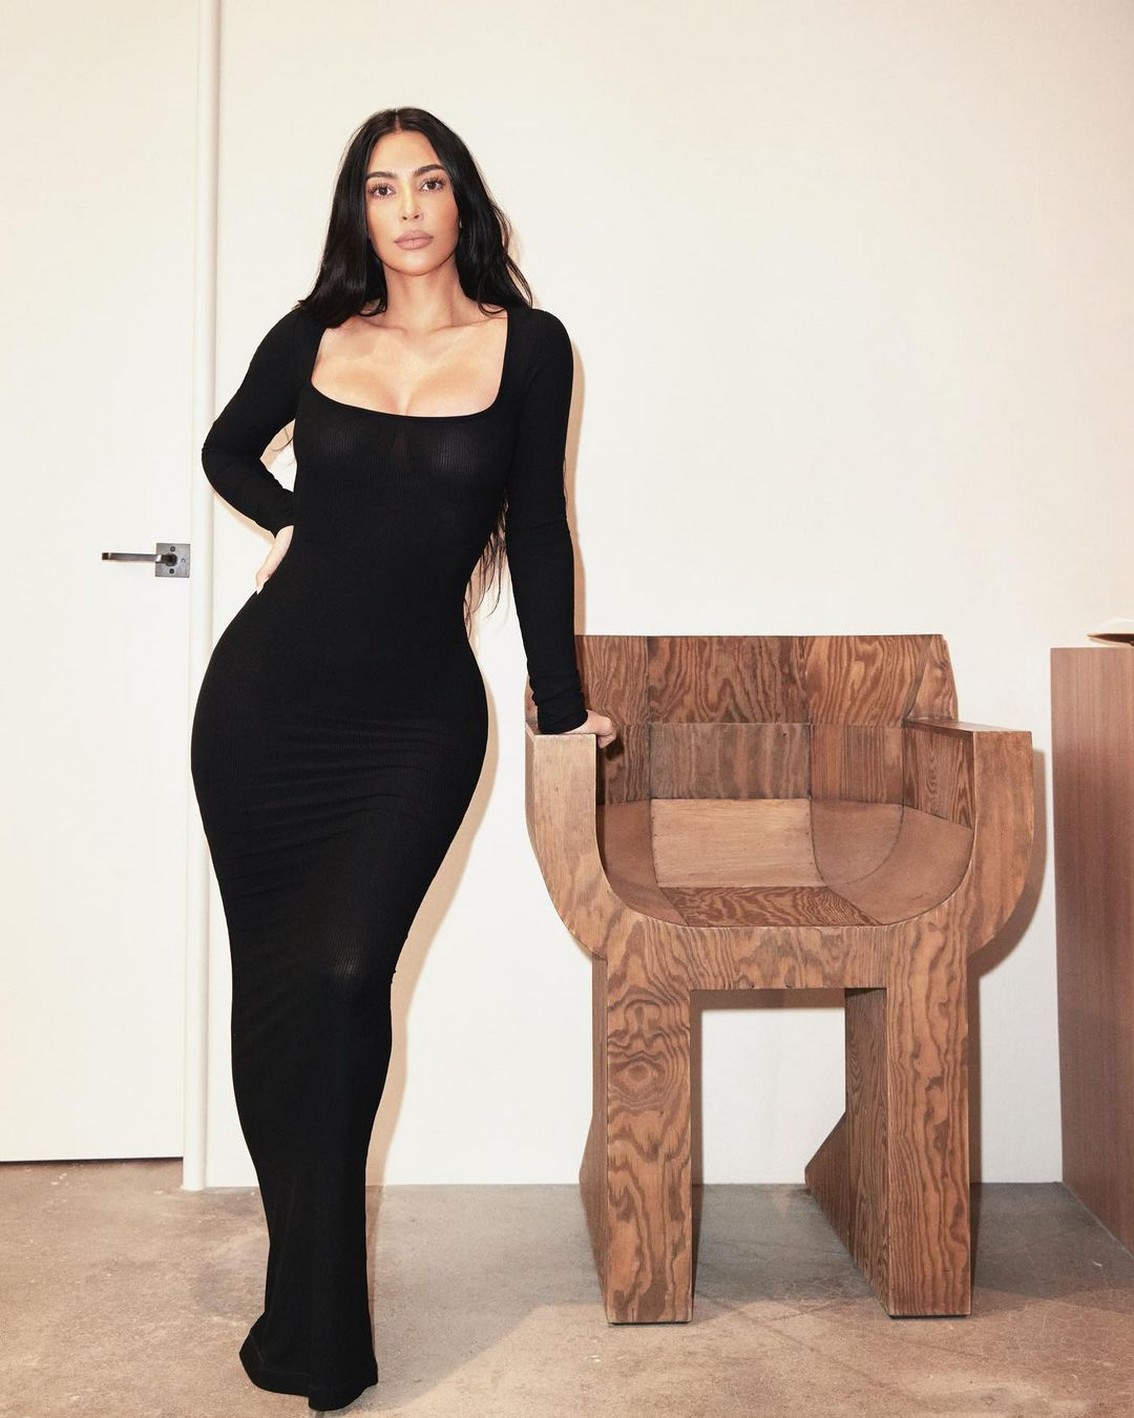 Kim Kardashian Sexy In Tight Black Dress TheFappening.Pro 3 - Kim Kardashian Sexy In Tight Black Dress (3 Photos)